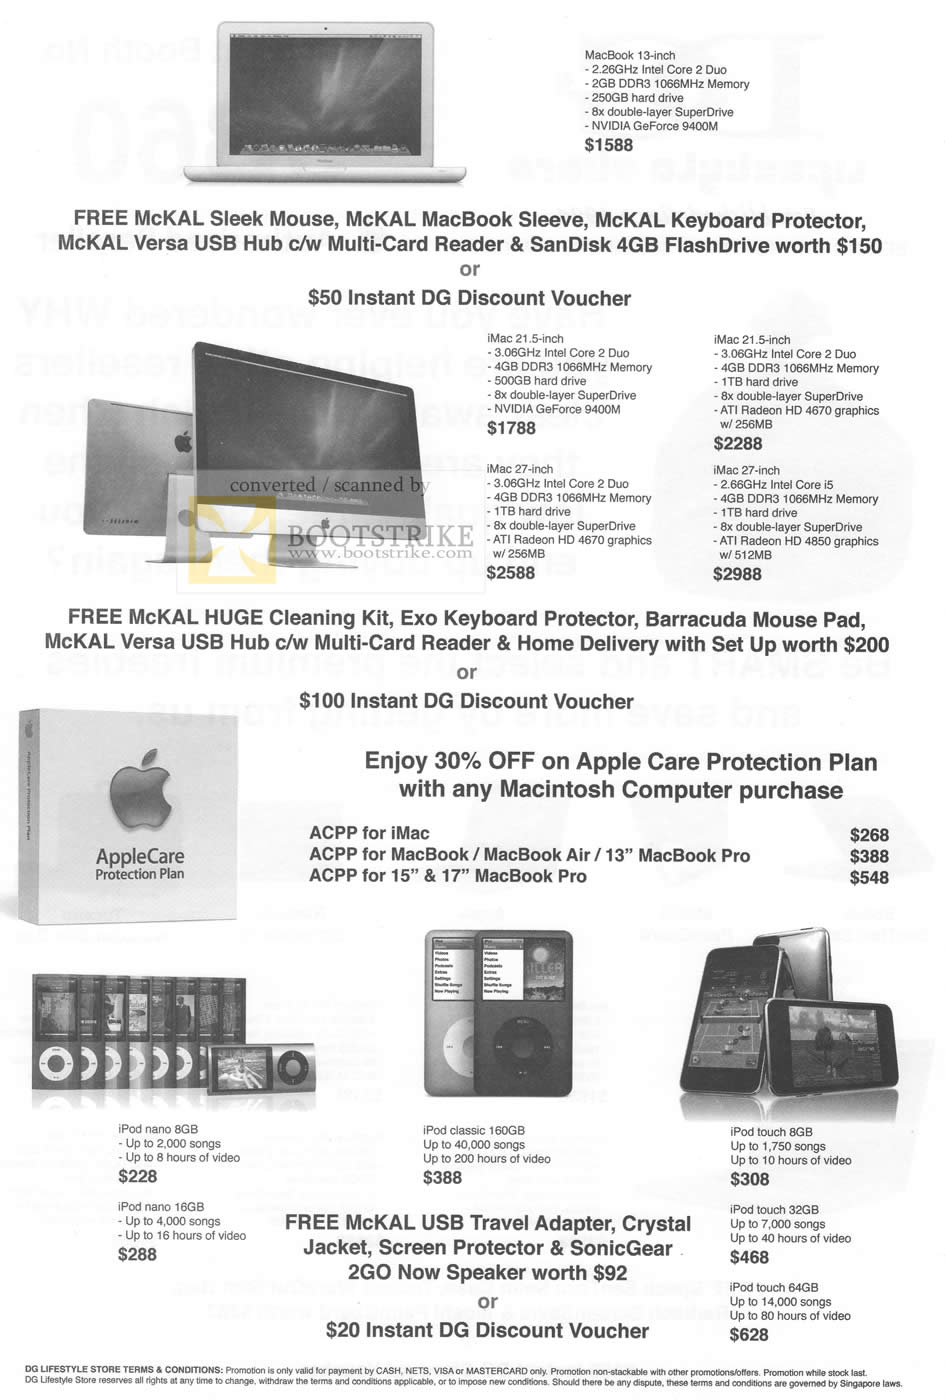 Sitex 2009 price list image brochure of Apple DG Lifestyle MacBook IMac Apple Care IPod Nano Classic Touch